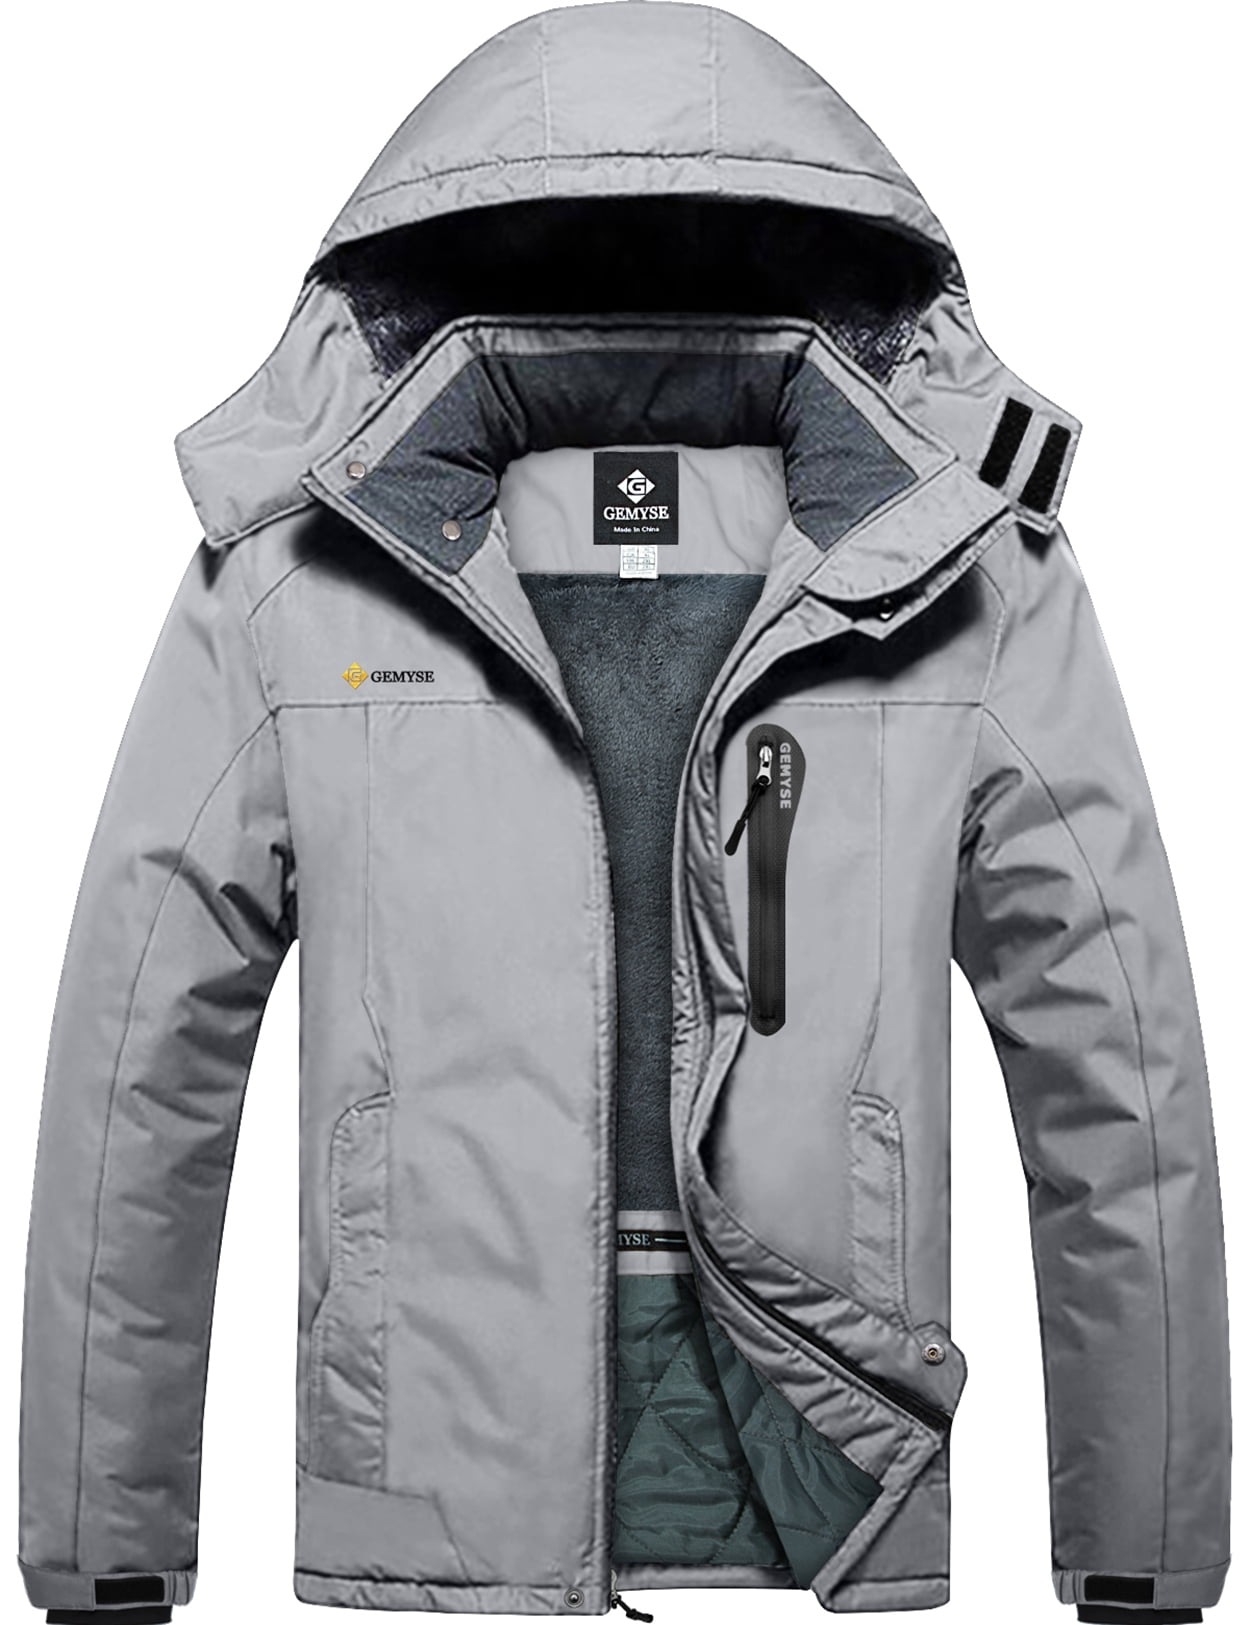 GEMYSE Boy's Waterproof Ski Snow Jacket Hooded Fleece Windproof Winter Jacket 